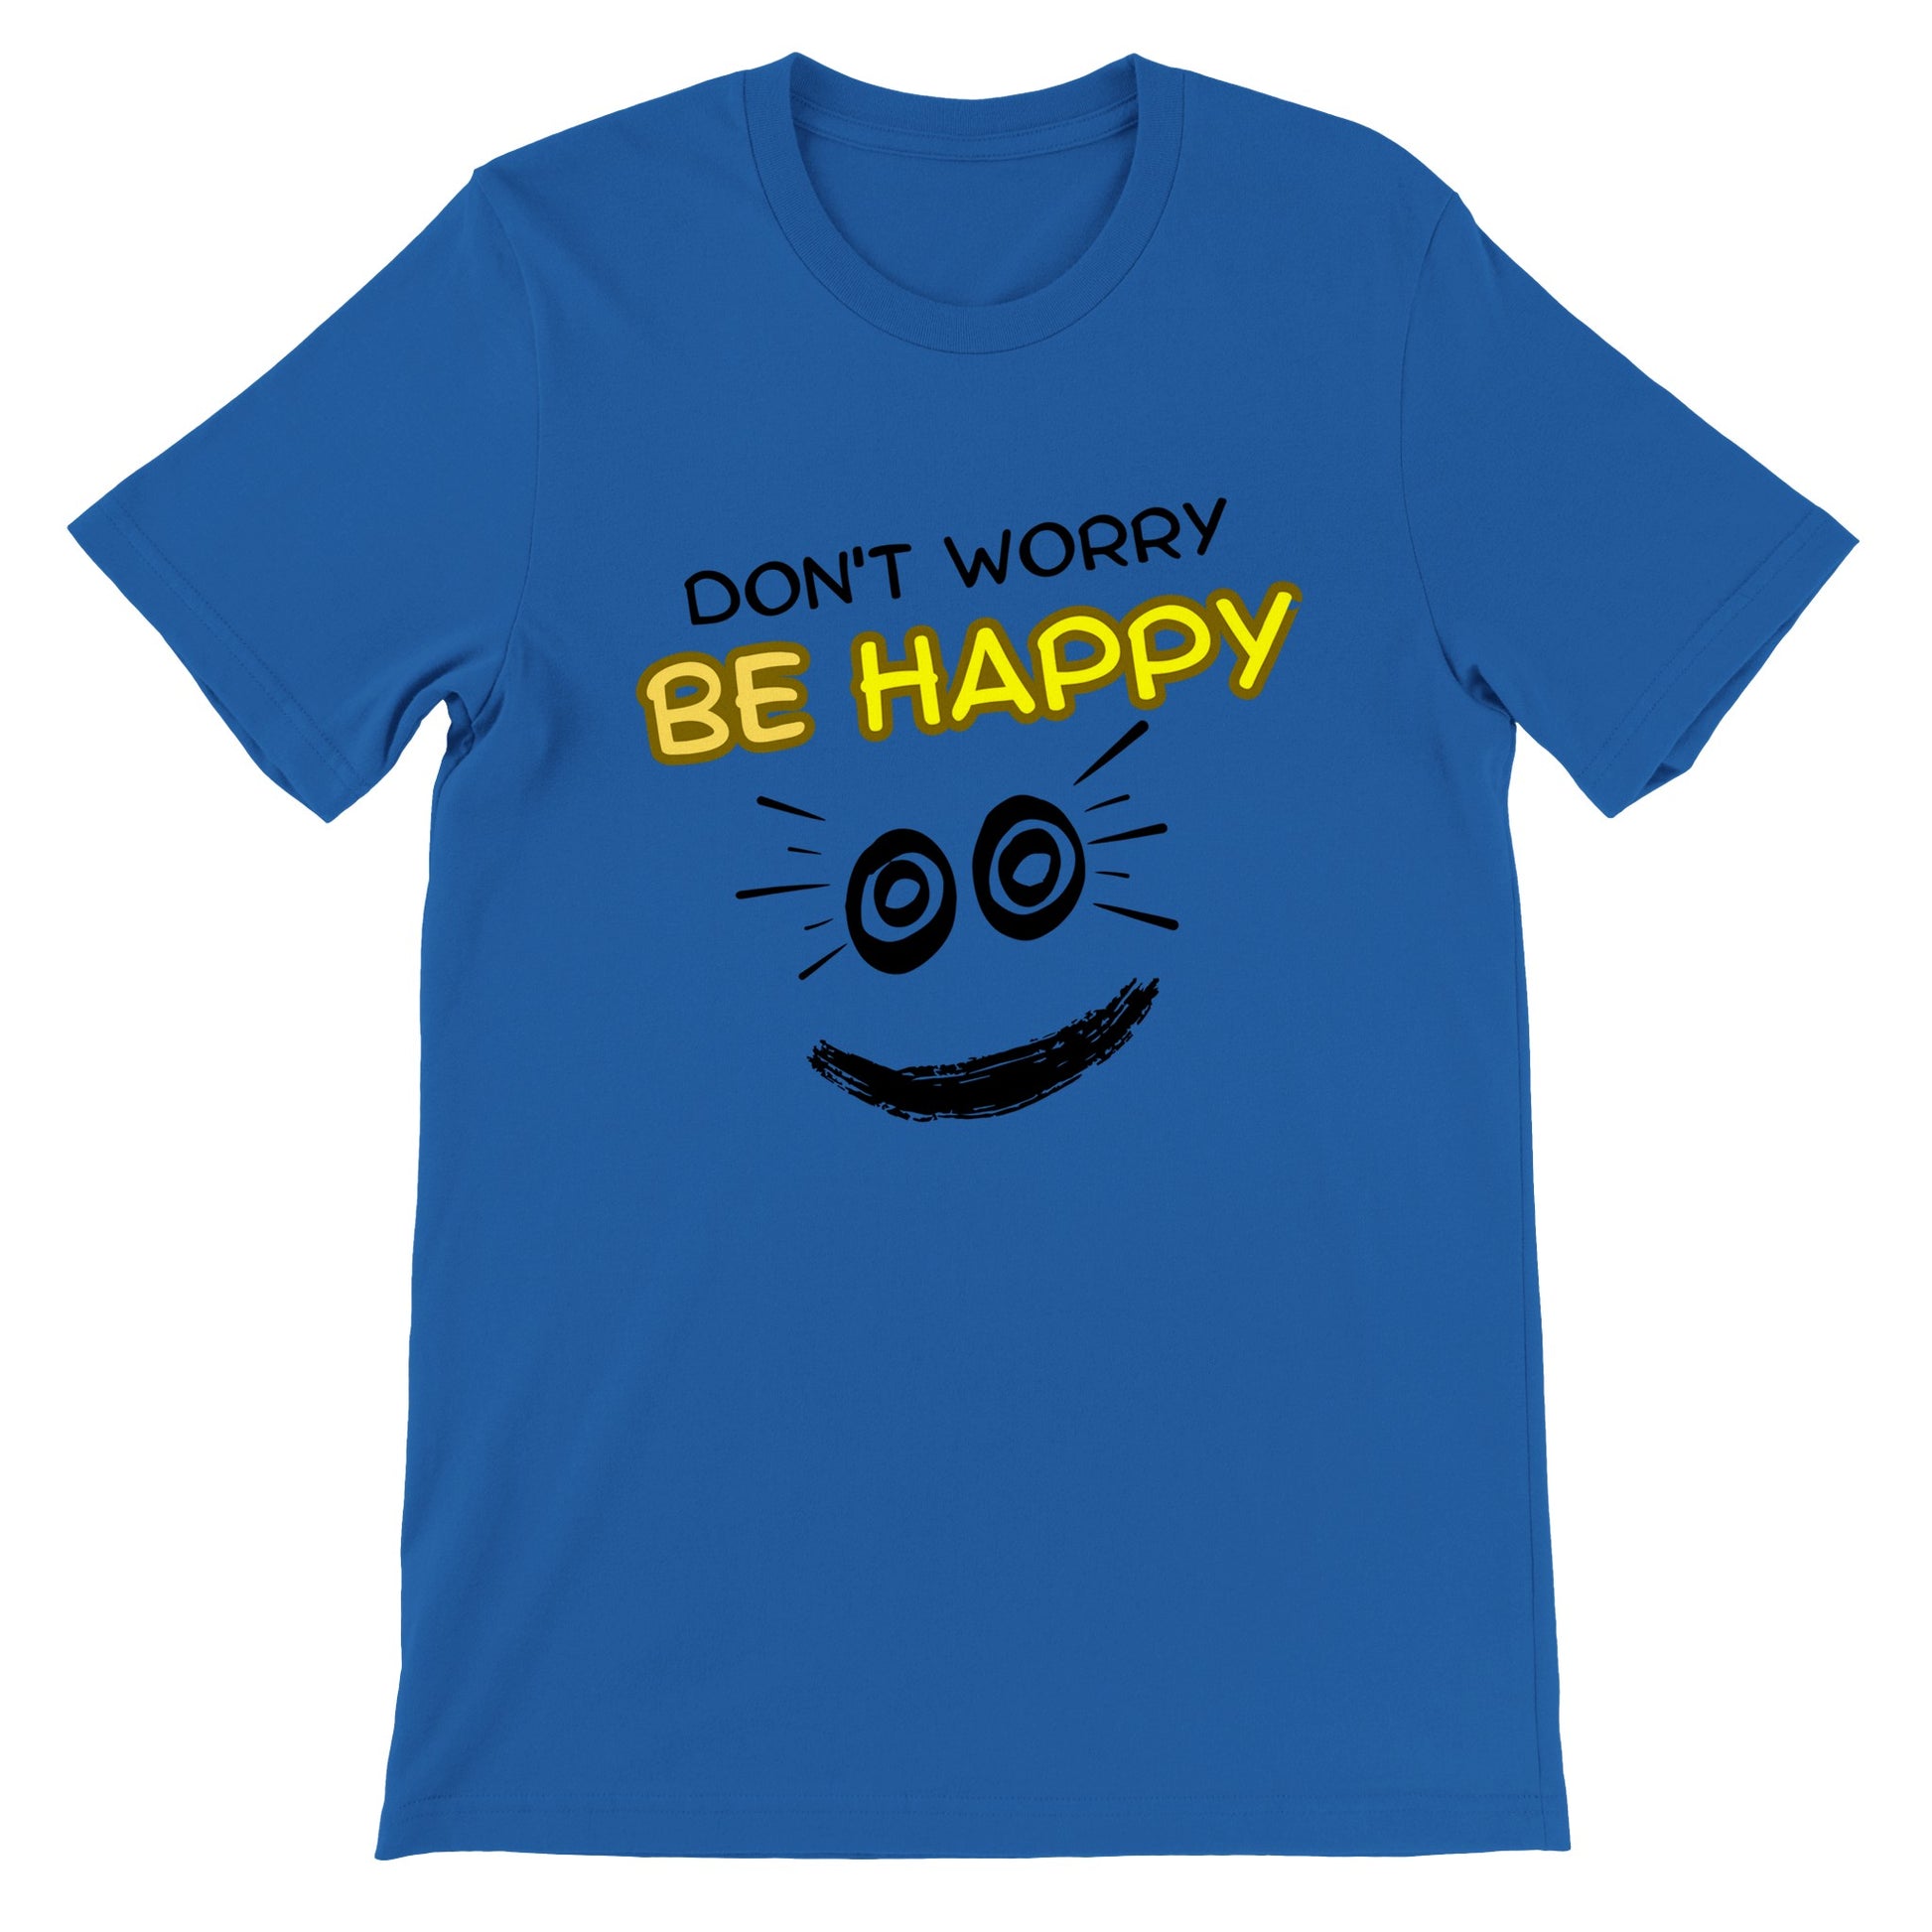 Camiseta azul con mensaje motivacion 